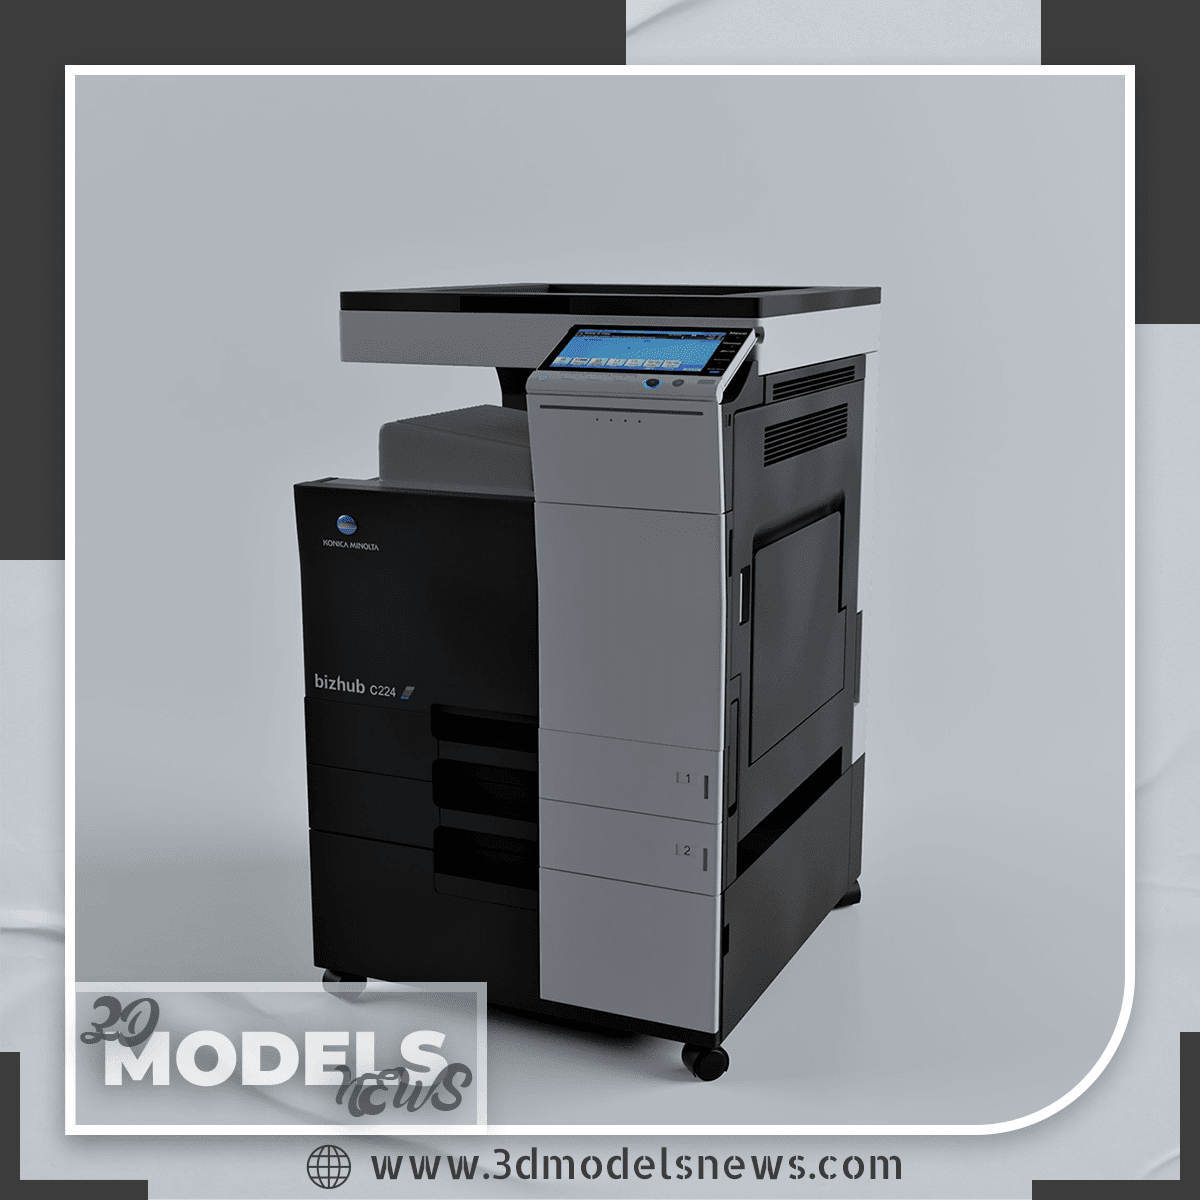 Konica minolta printer model